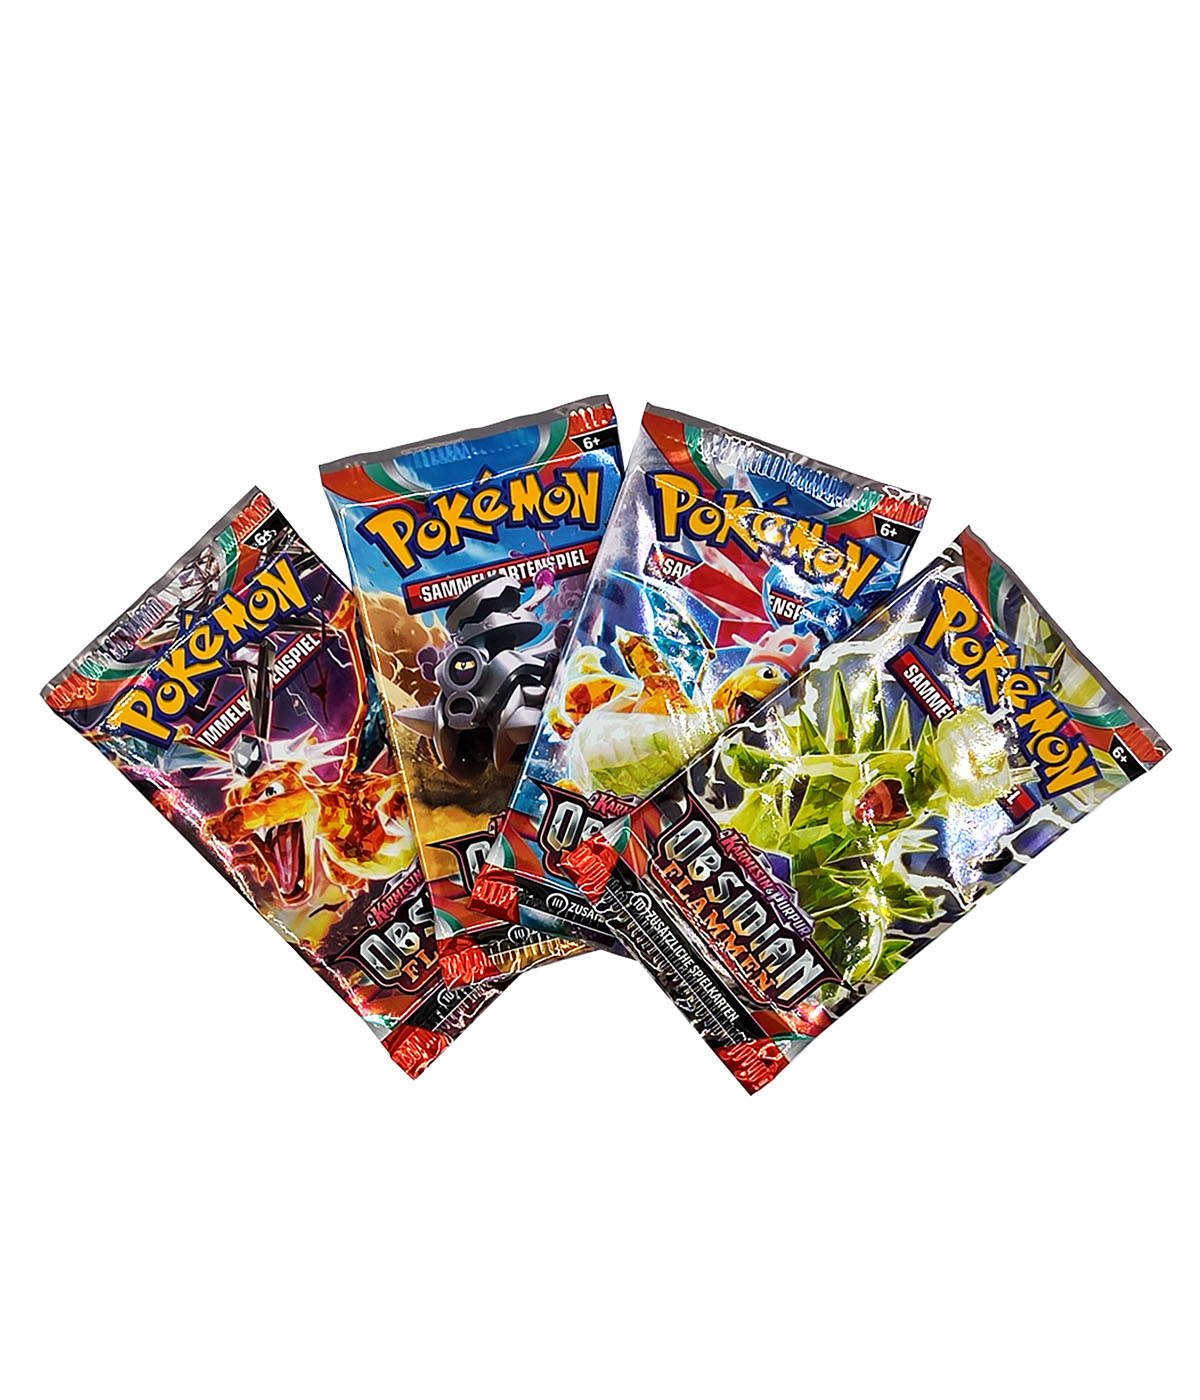 Pokémon Double Bundle "Obsidianflammen" - 2 Displays mit je 18 Boosterpacks